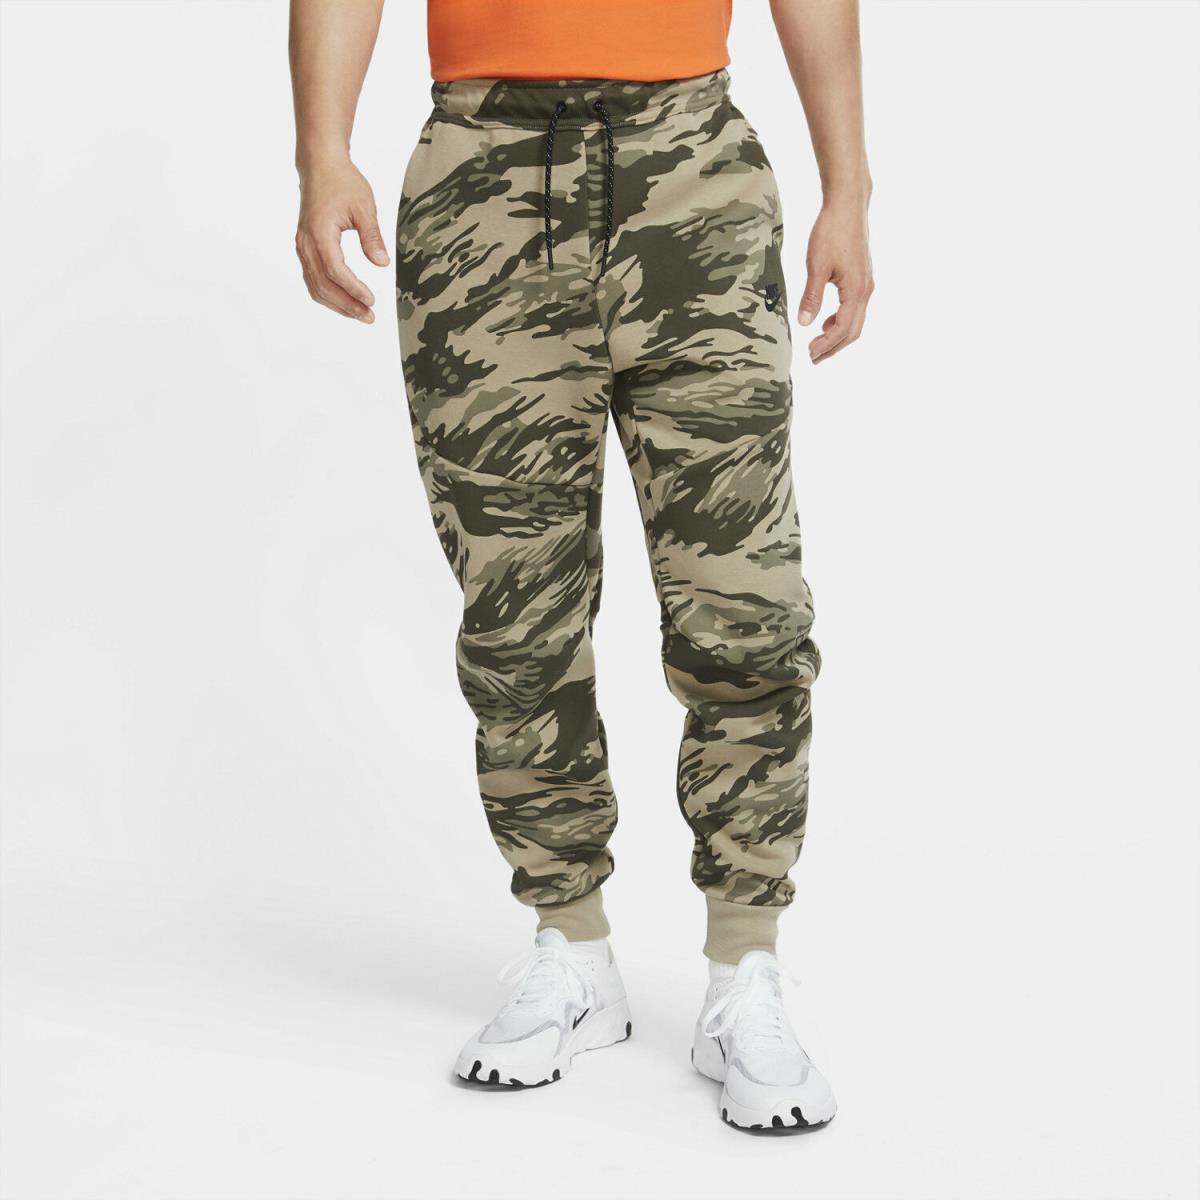 Nike Tech Fleece Pants CU4497-342 Olive Army Tan Beige Camo Jogger Tapered Slim